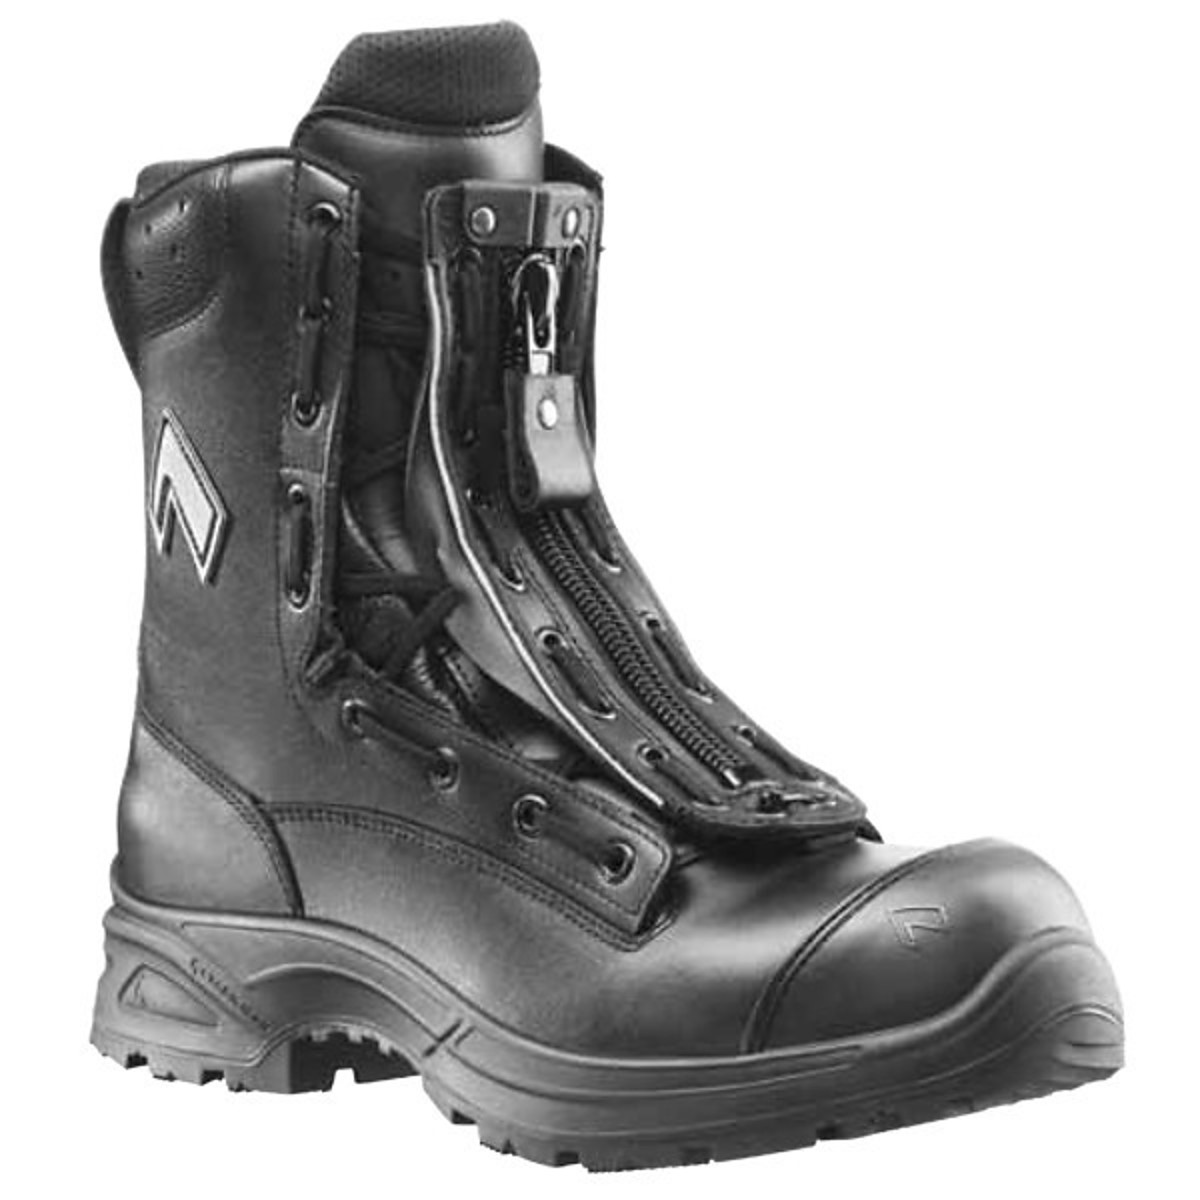 Haix XR1 combat boots